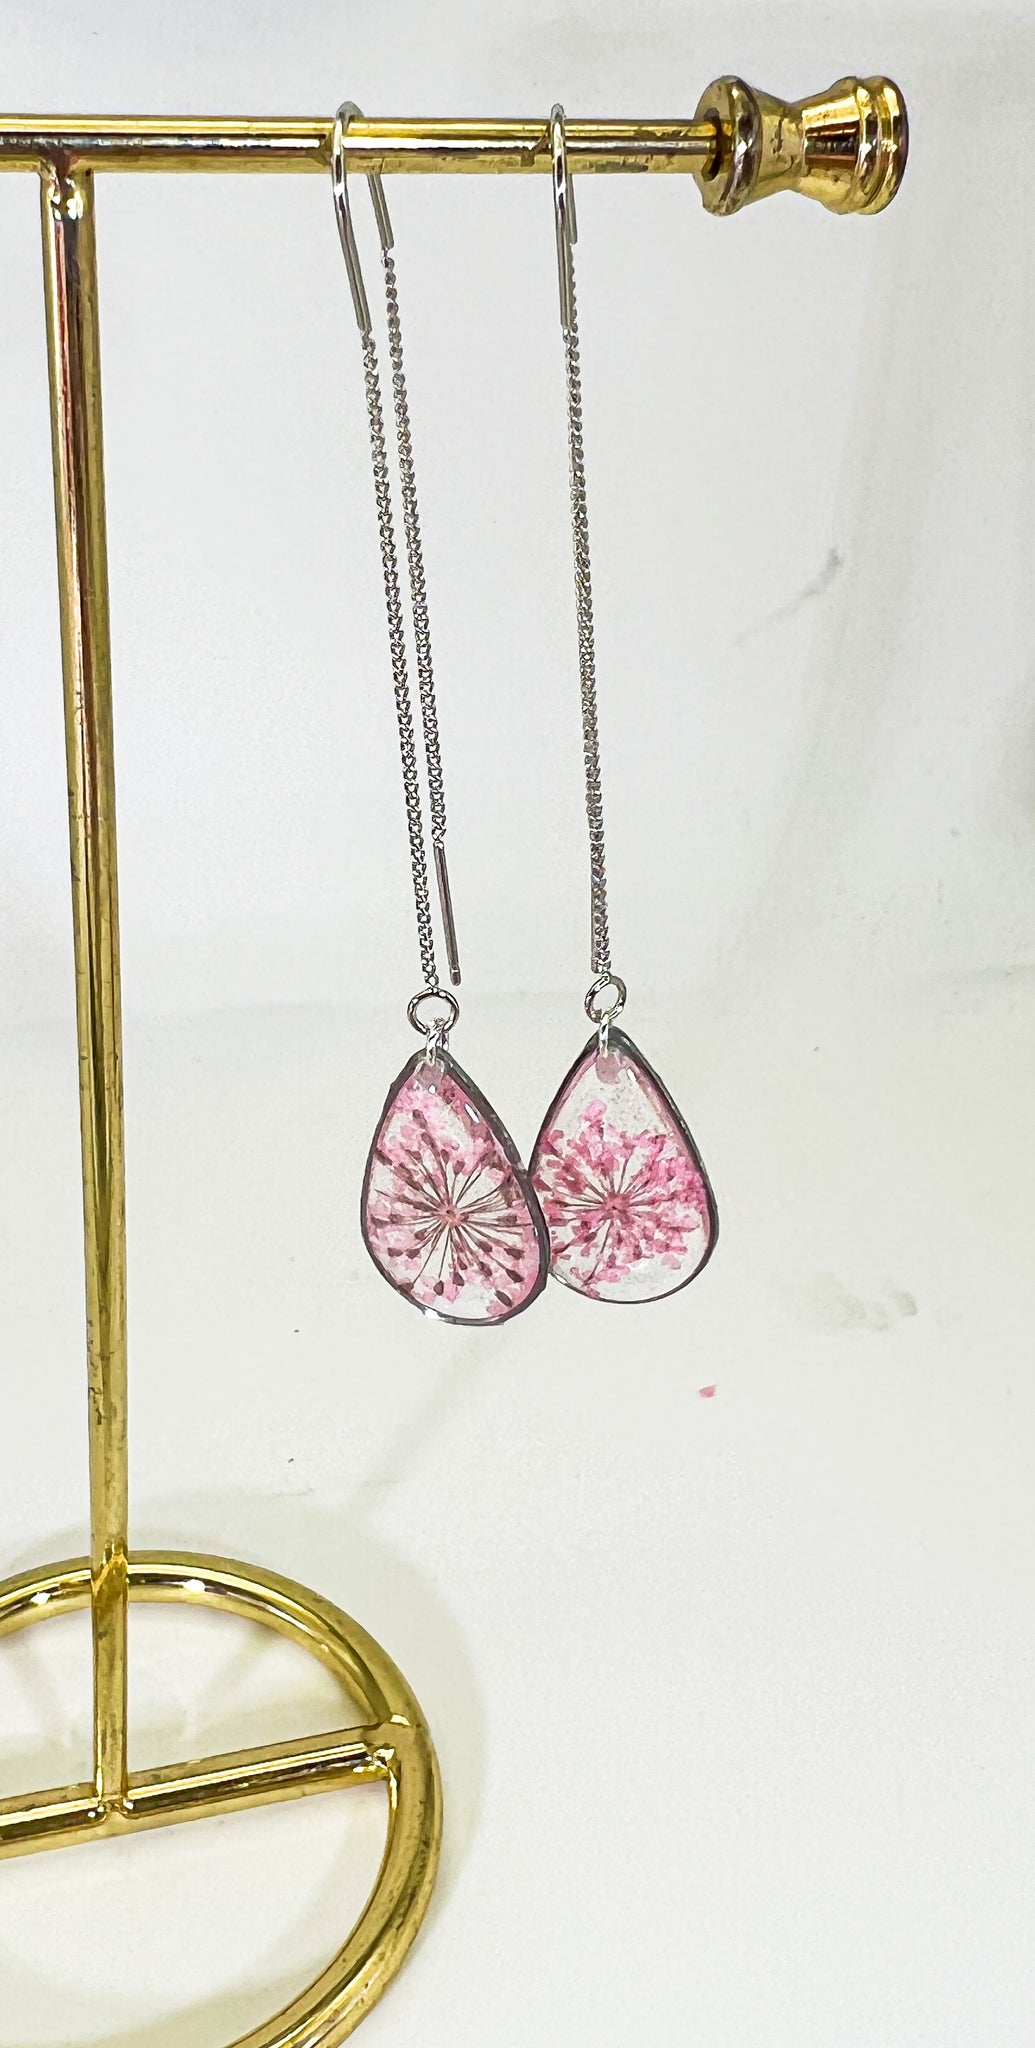 Pink Queen Anne’s lace ear threader earrings